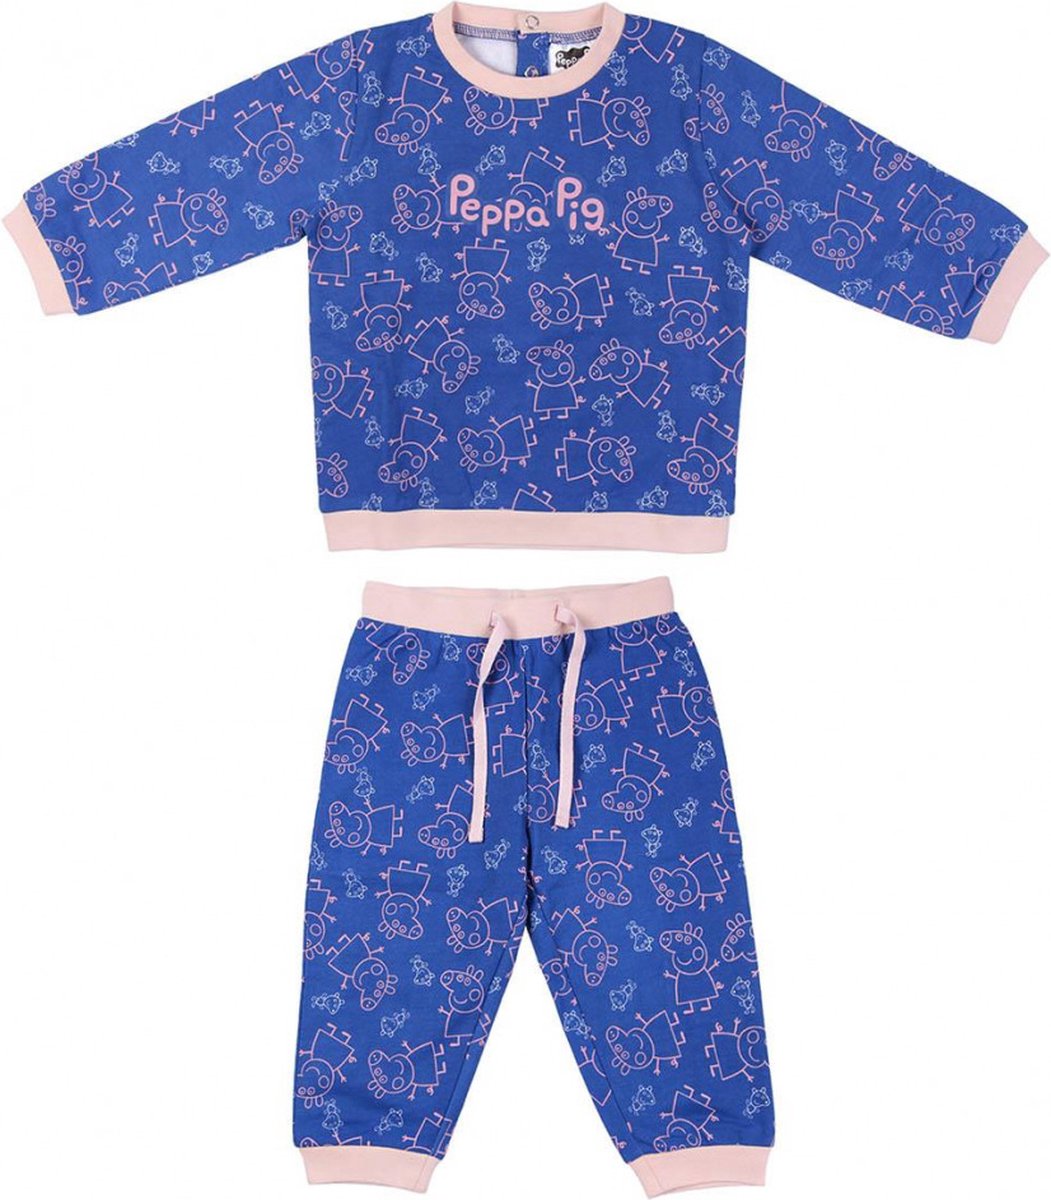 Original Peppa Pig trainingspak newborn kledingset - baby kids - maat 86 cm - 24 maanden - katoen set broekje trui Premium